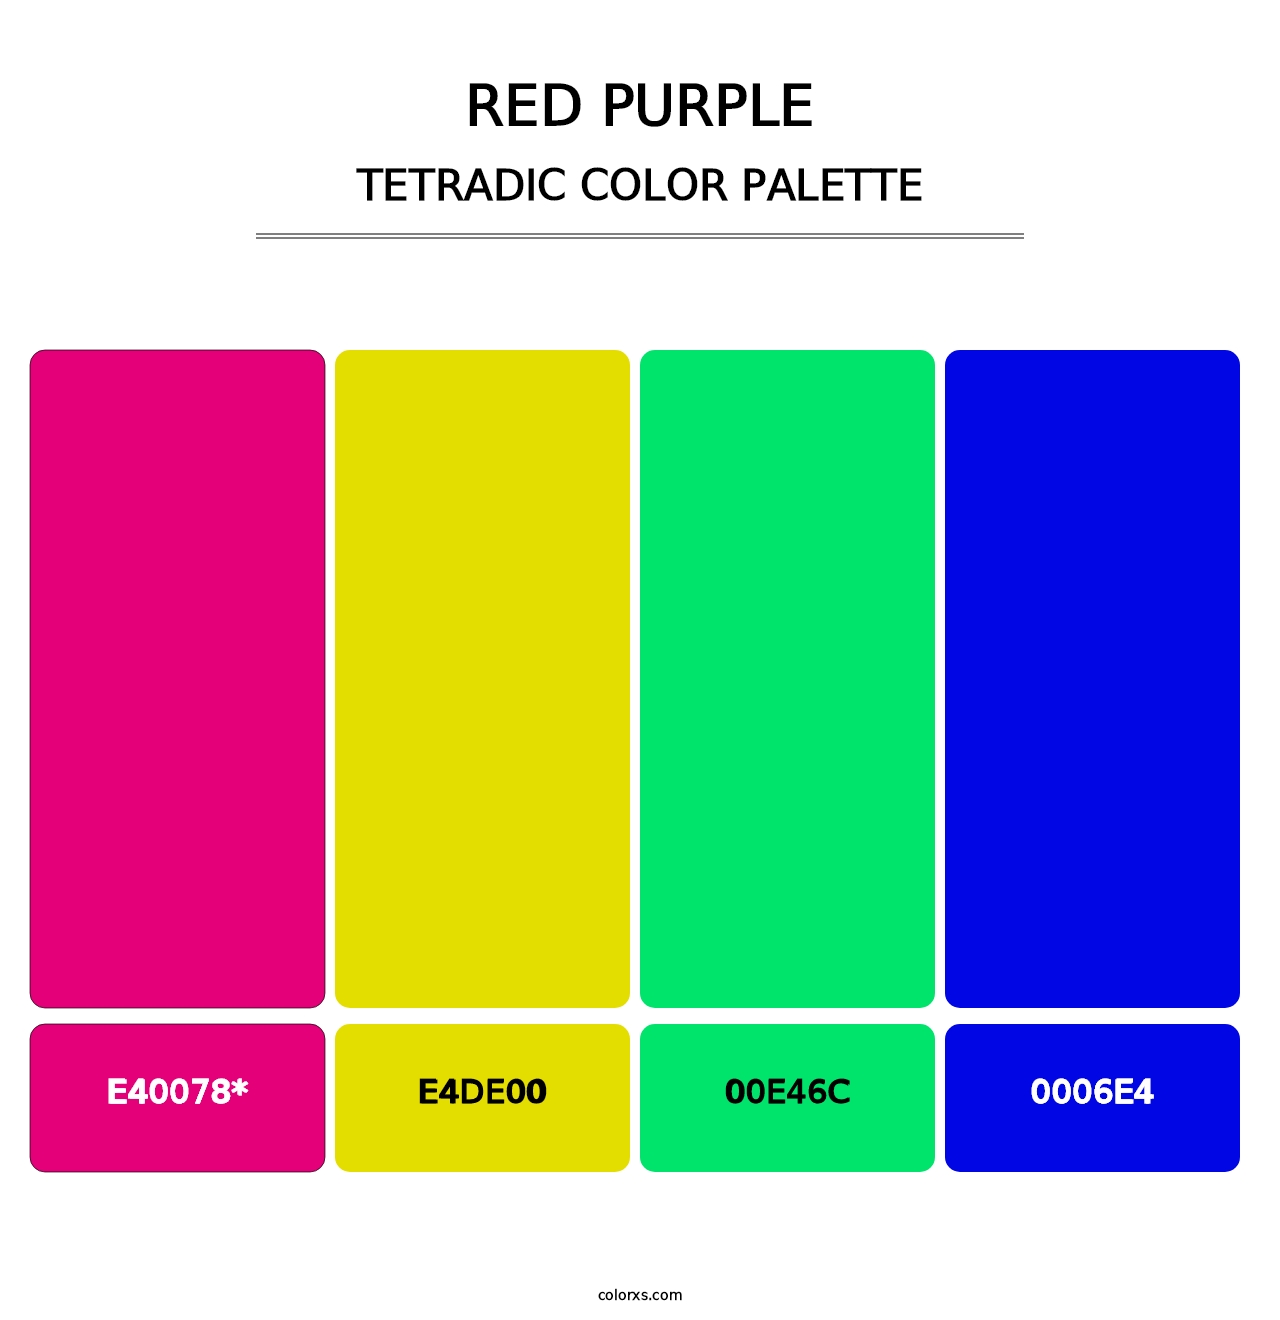 Red Purple - Tetradic Color Palette